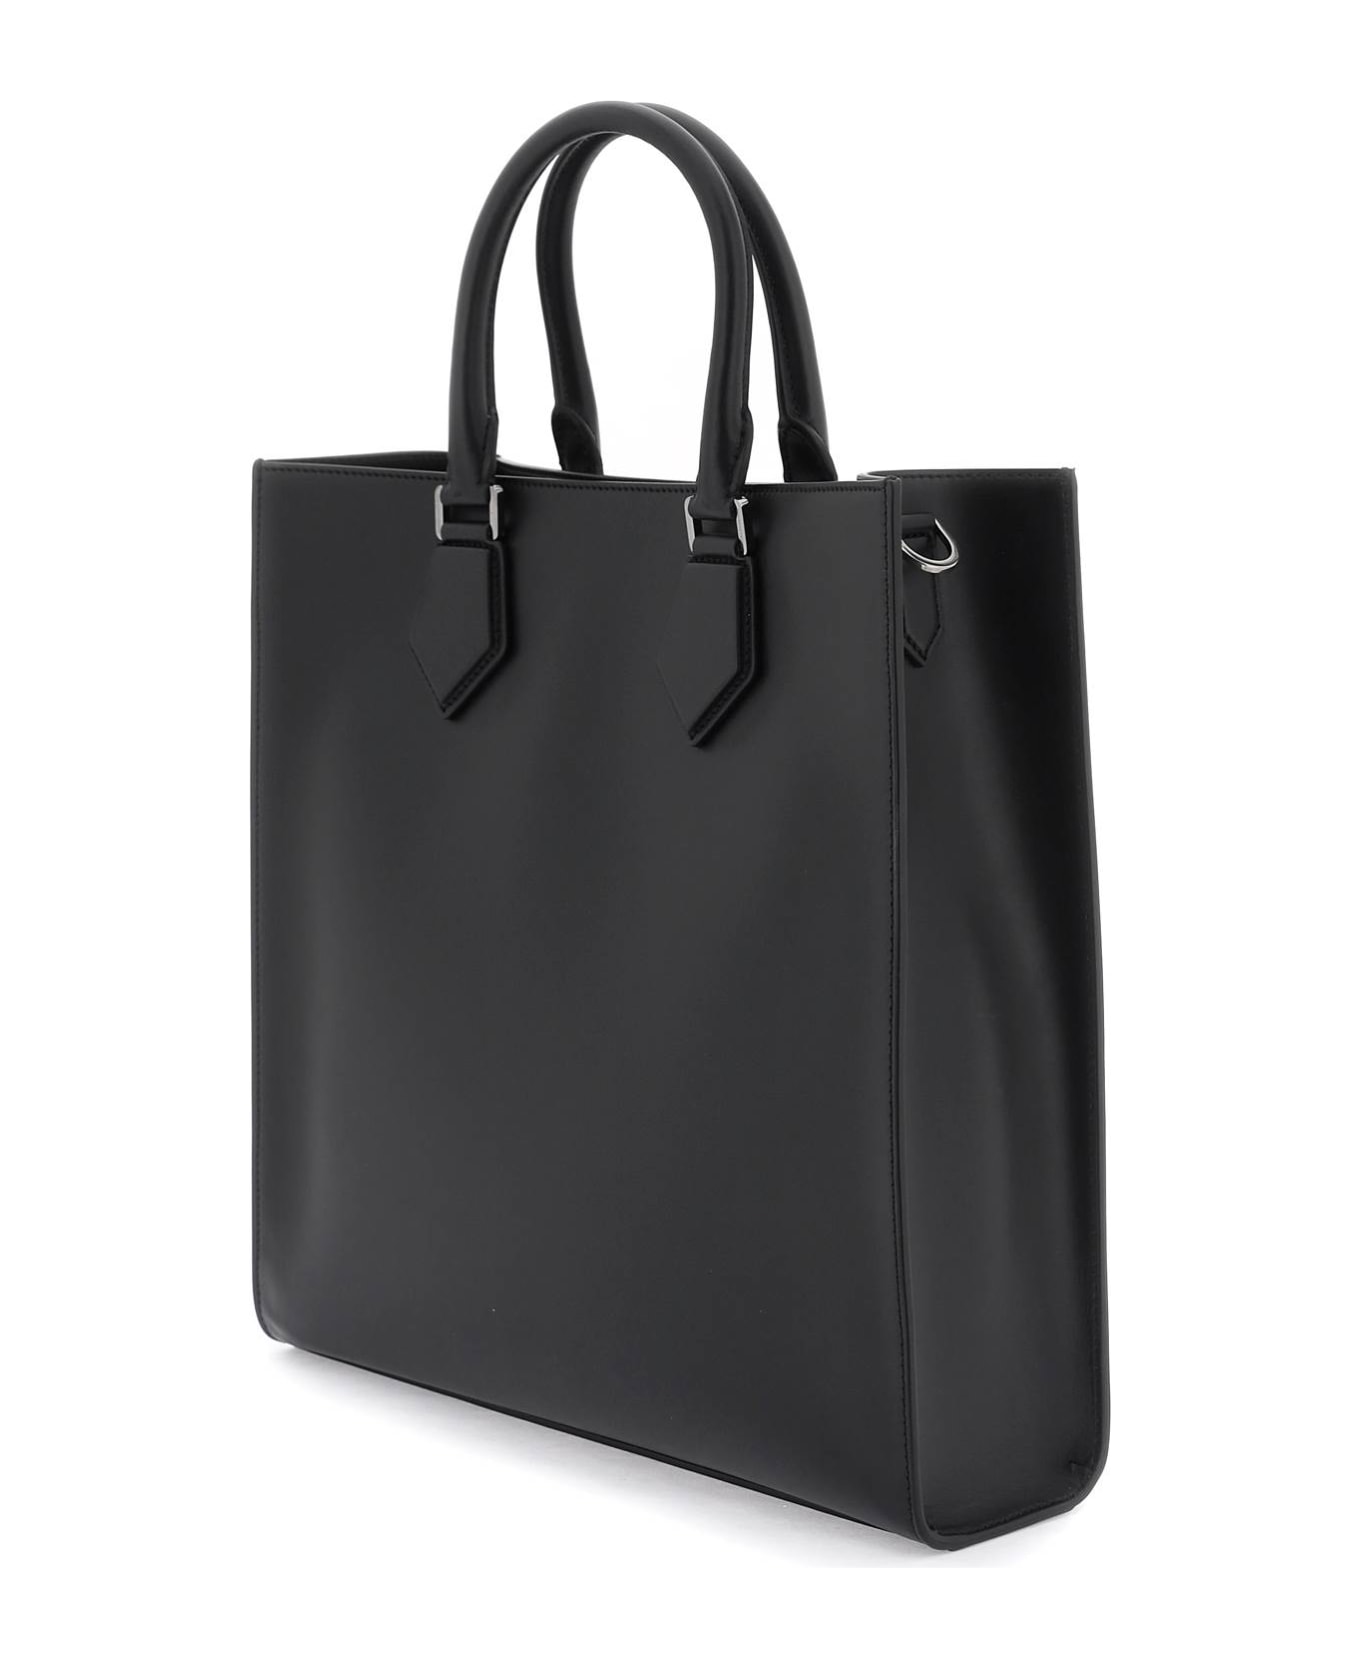 Dolce & Gabbana Black Leather Bag - Black